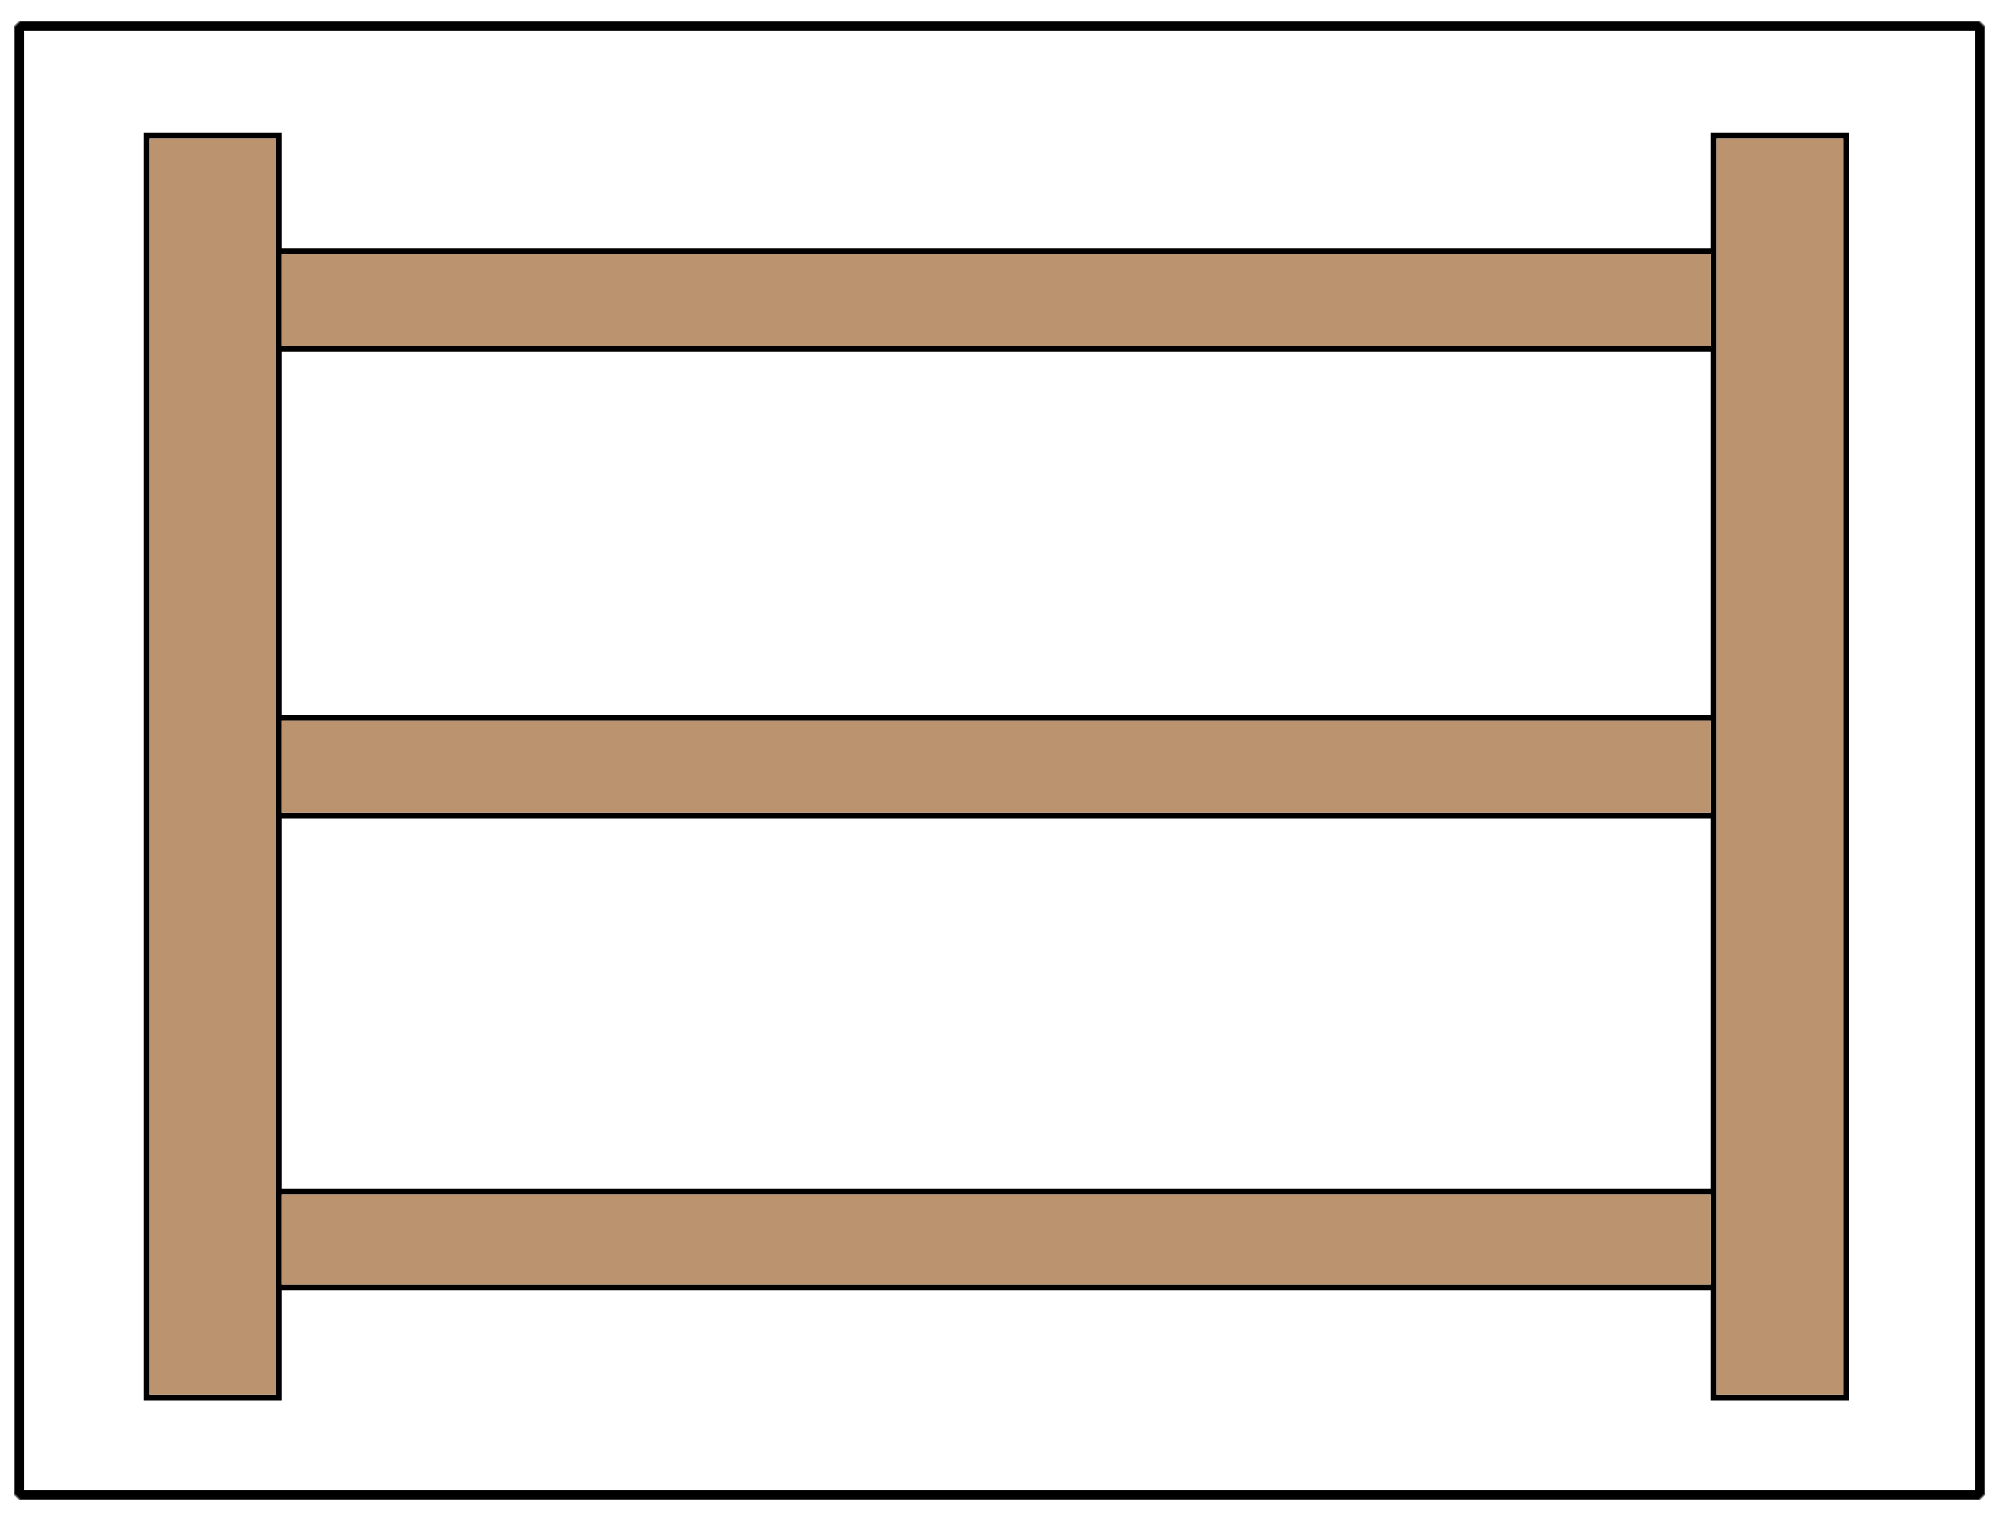 Illustration of a split rail or estate fence using 3 rails